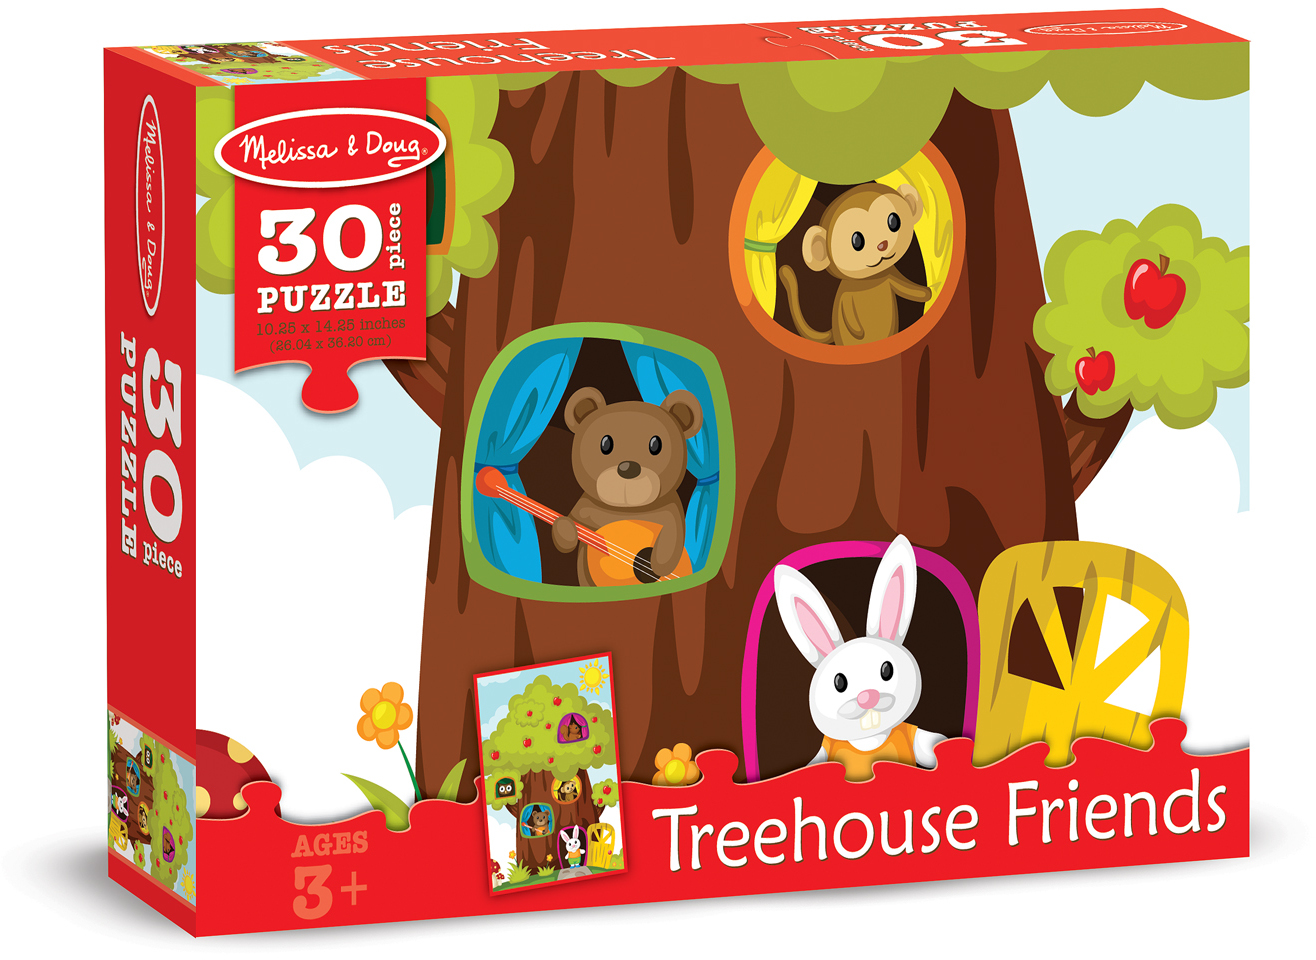 Melissa & Doug 0030 PC Treehouse Friends Cardboard Jigsaw(18x.51)